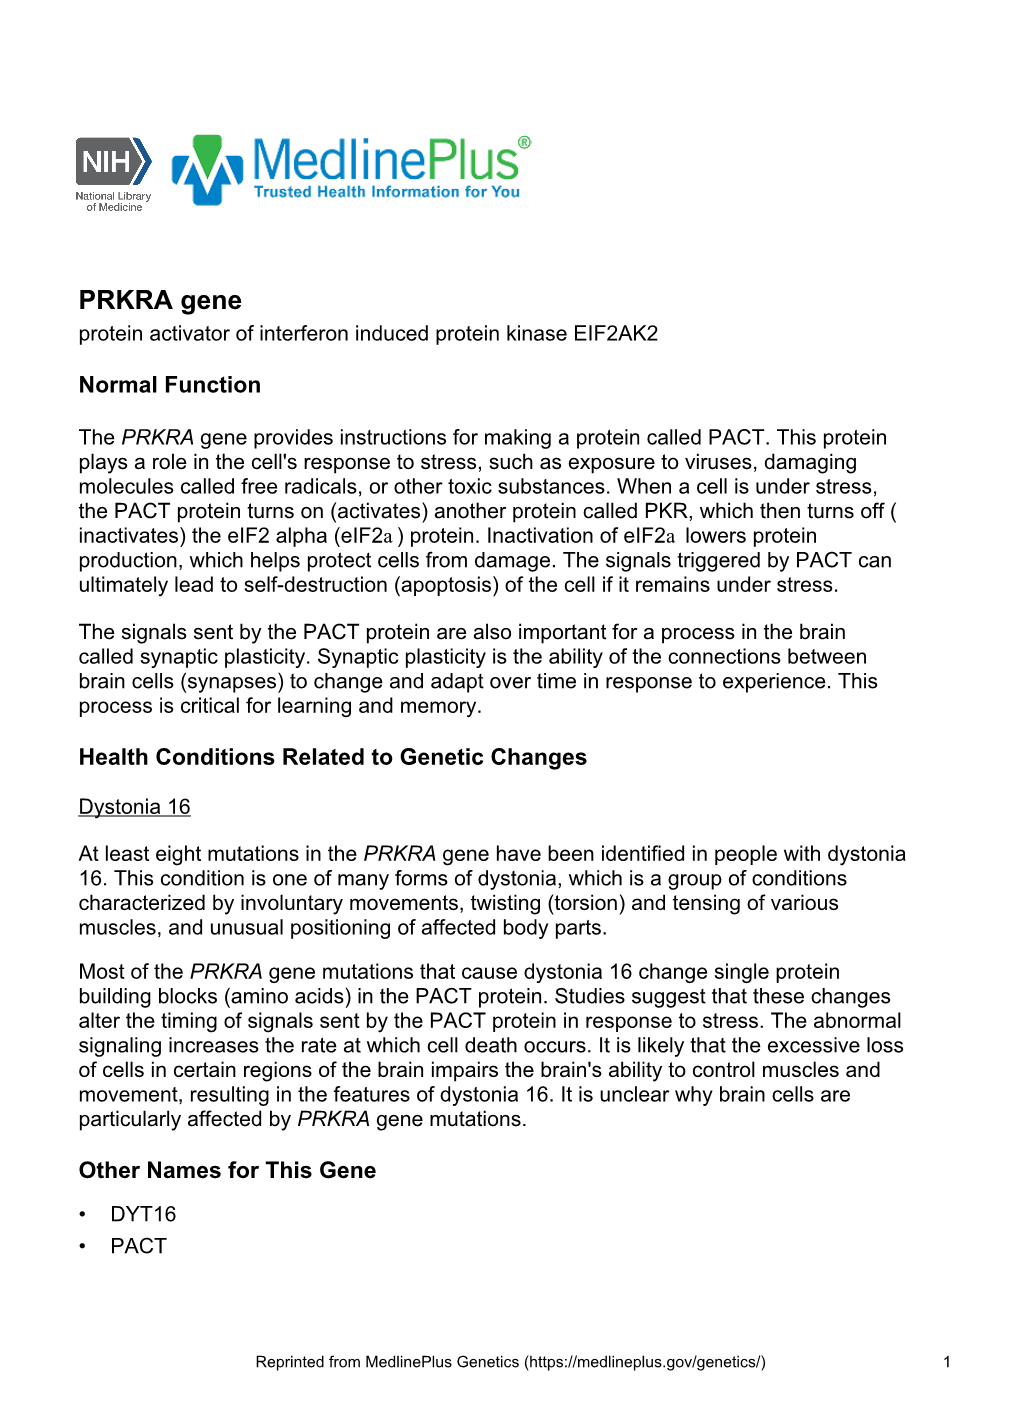 PRKRA Gene Protein Activator of Interferon Induced Protein Kinase EIF2AK2